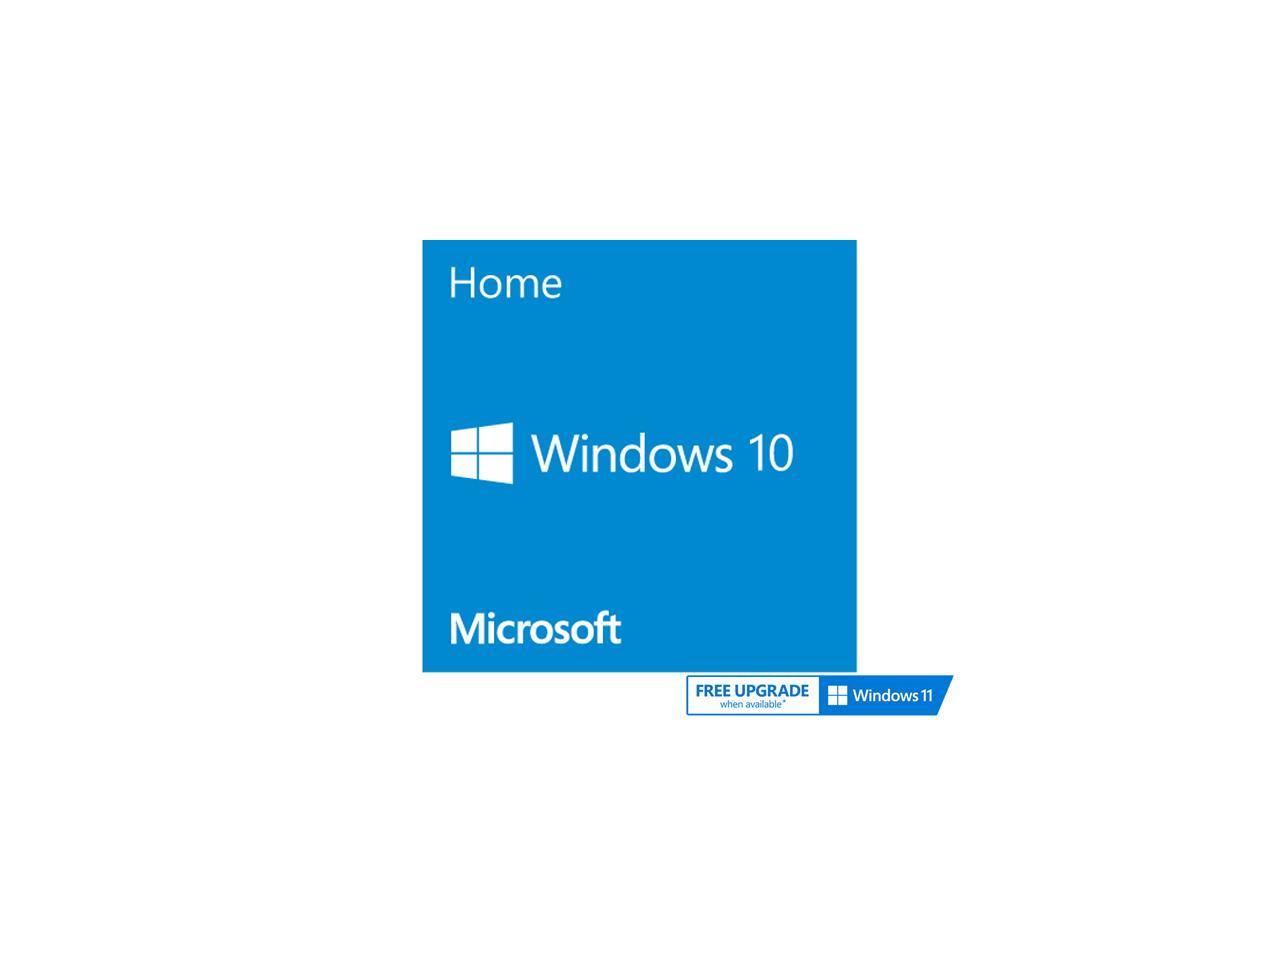 Microsoft MS WINDOWS 10 %